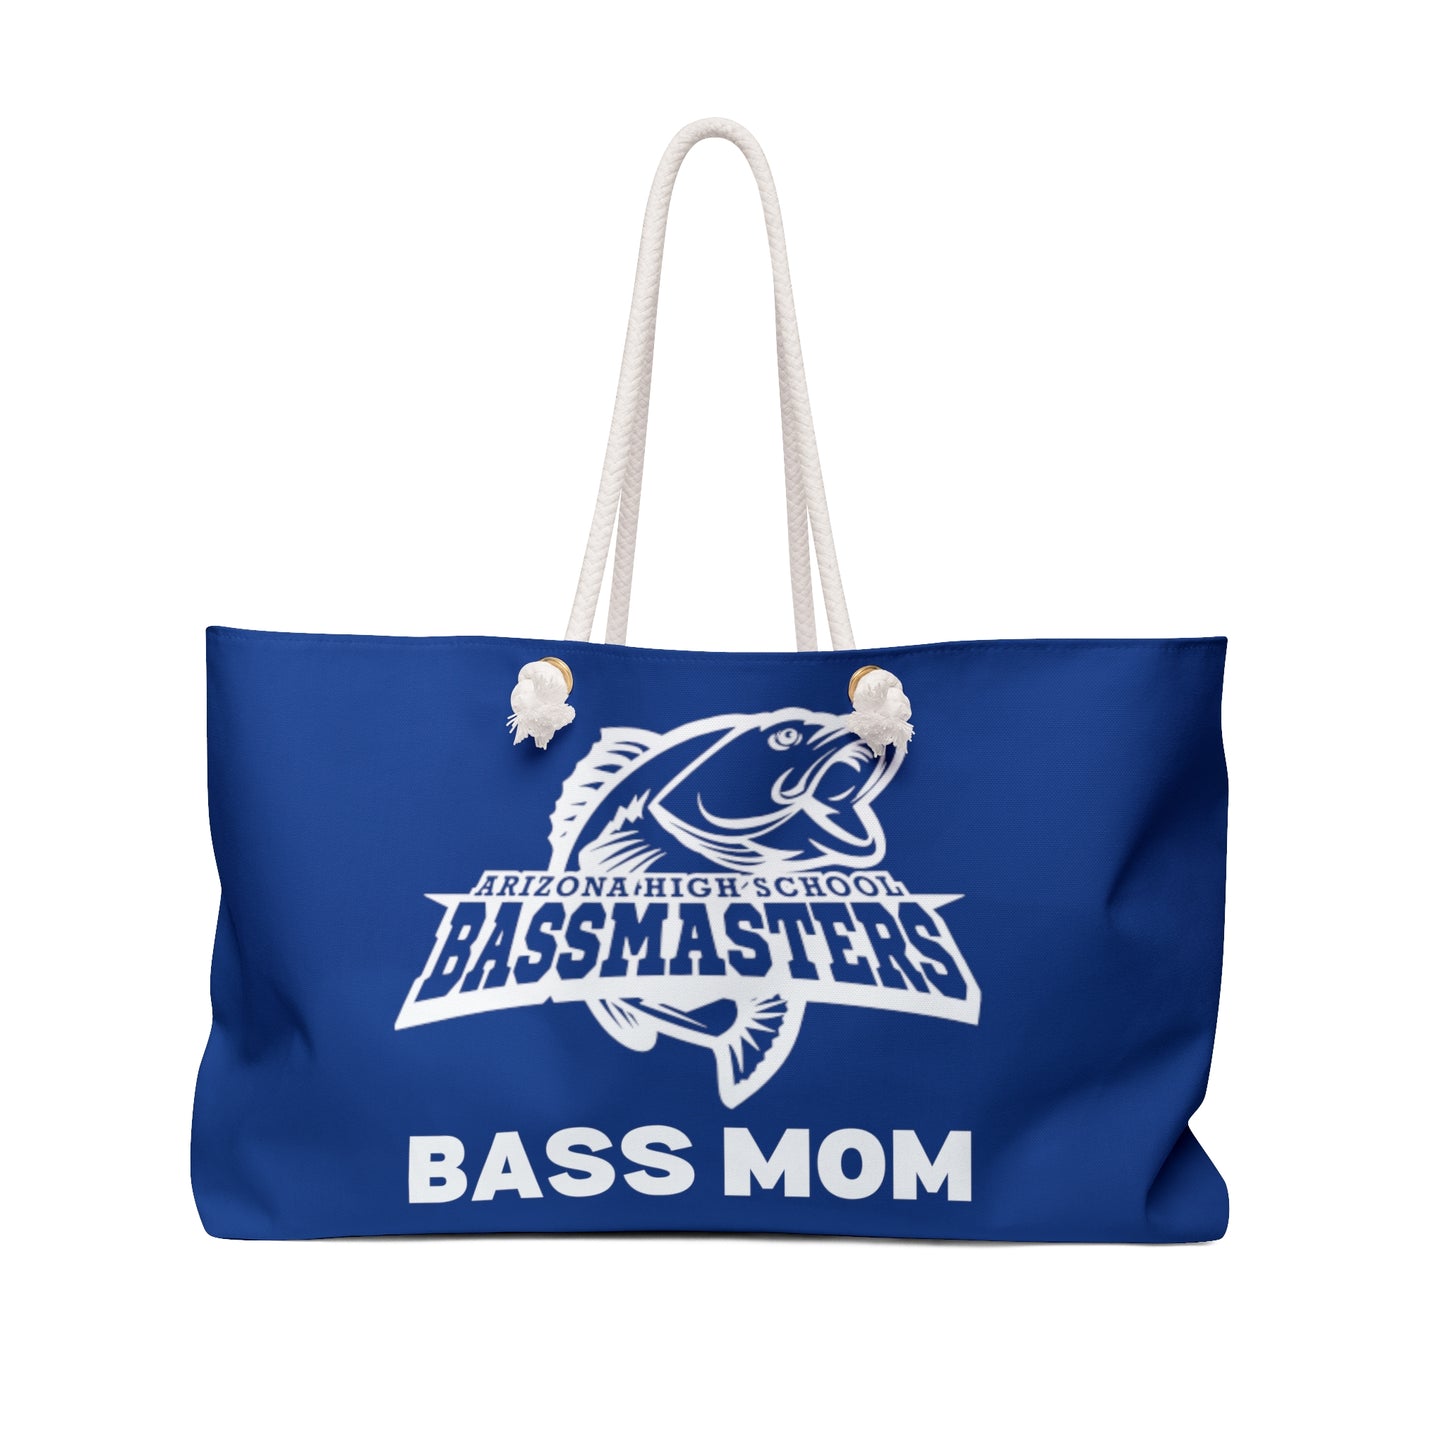 Junior Bassmasters High School - BASS MOM - Weekender Bag (Blue)